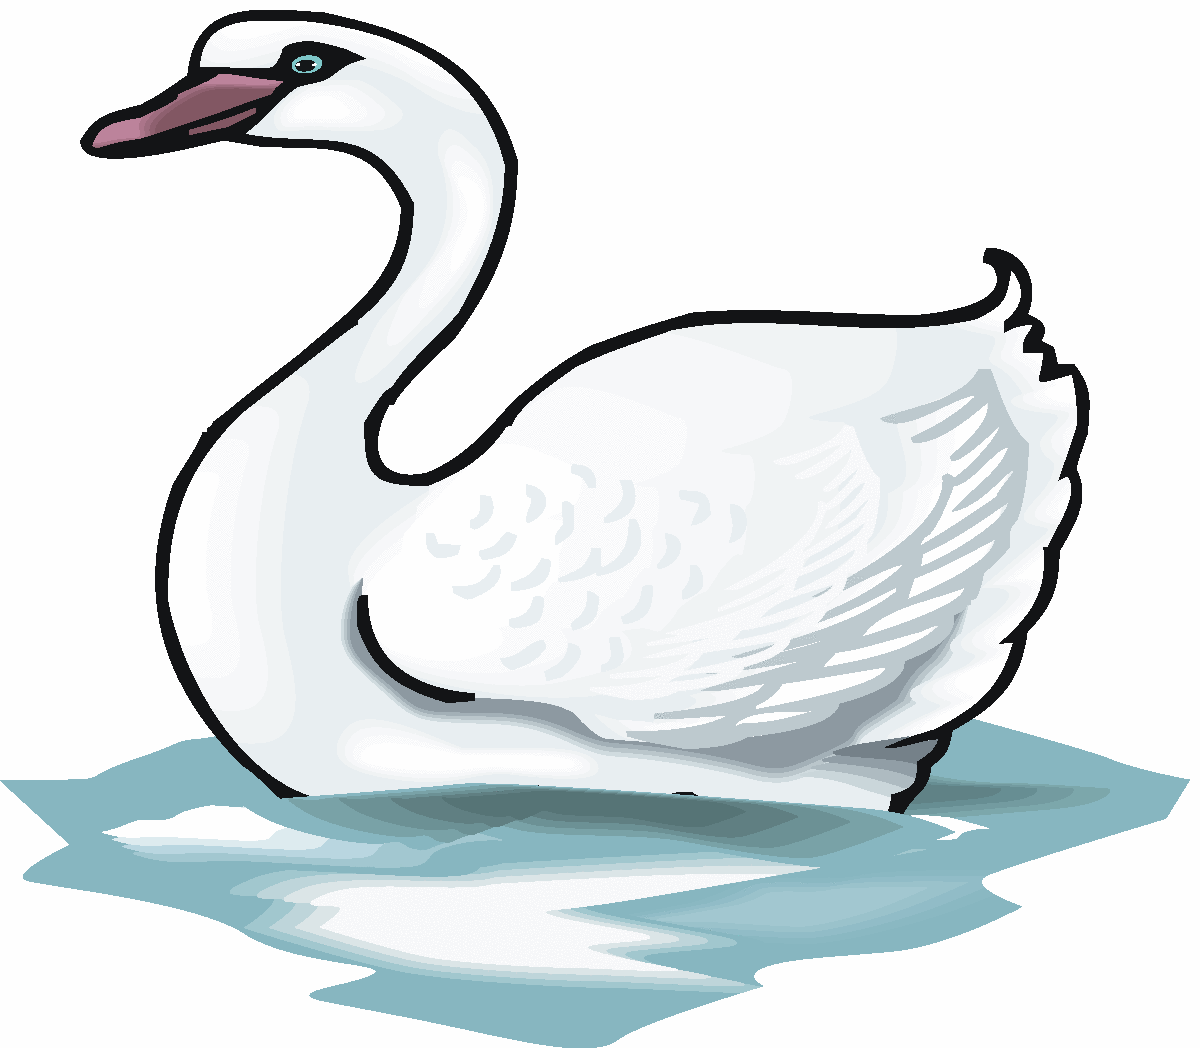 Trumpeter Swan clipart #14, Download drawings